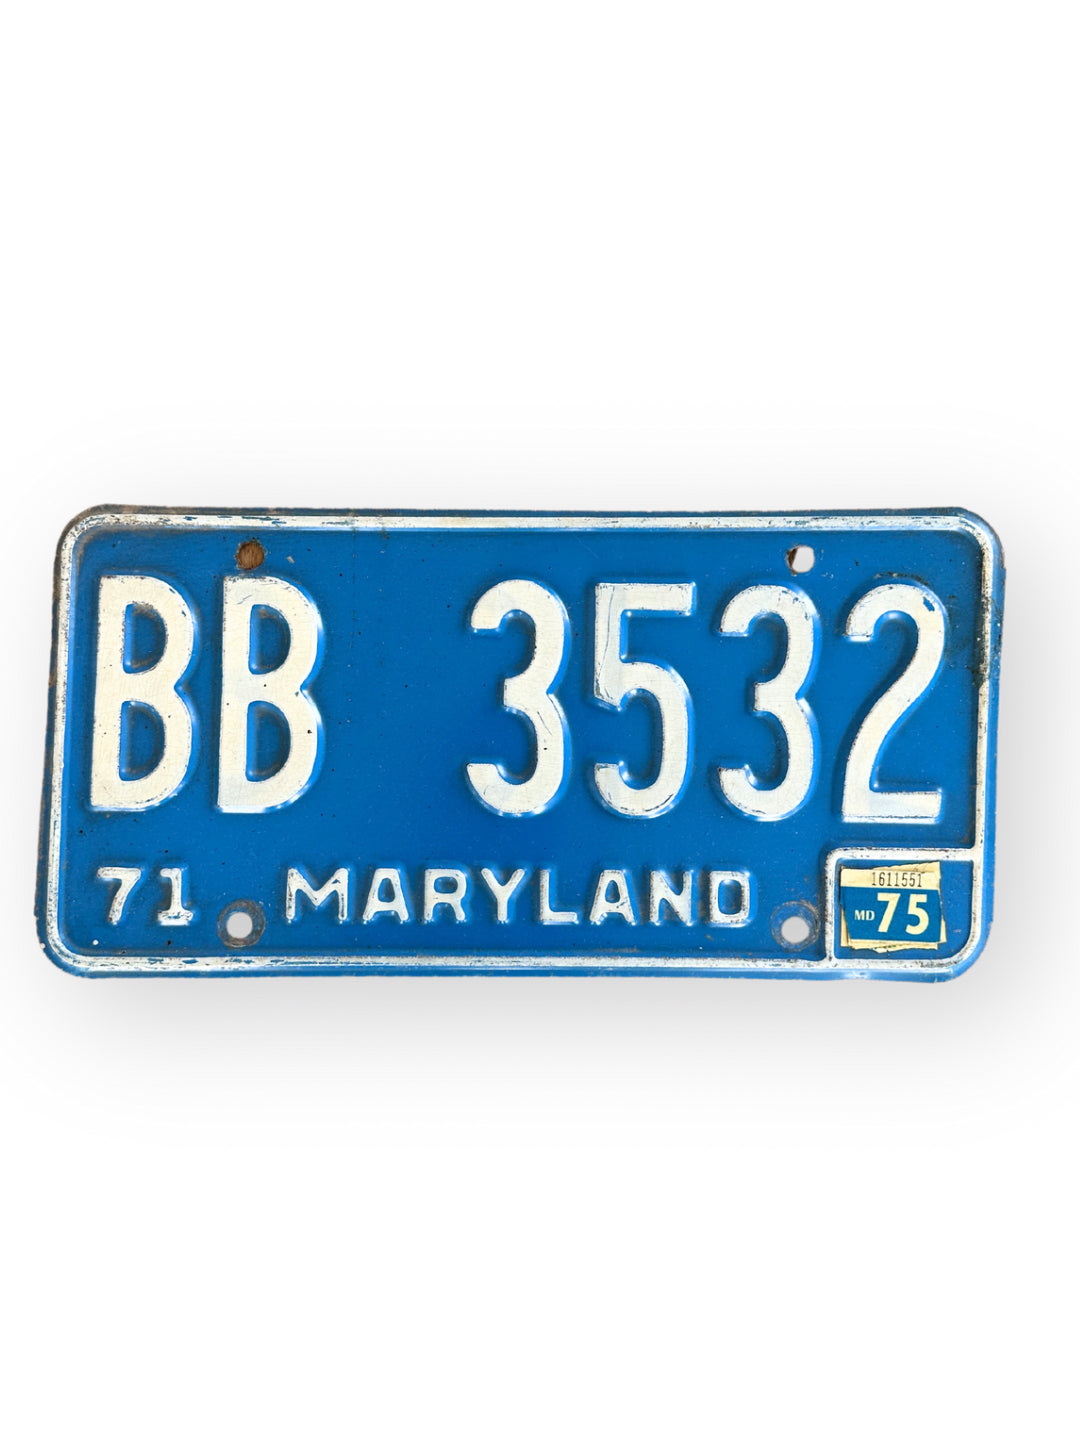 Vintage Nummernschild License Plate USA Maryland 1971